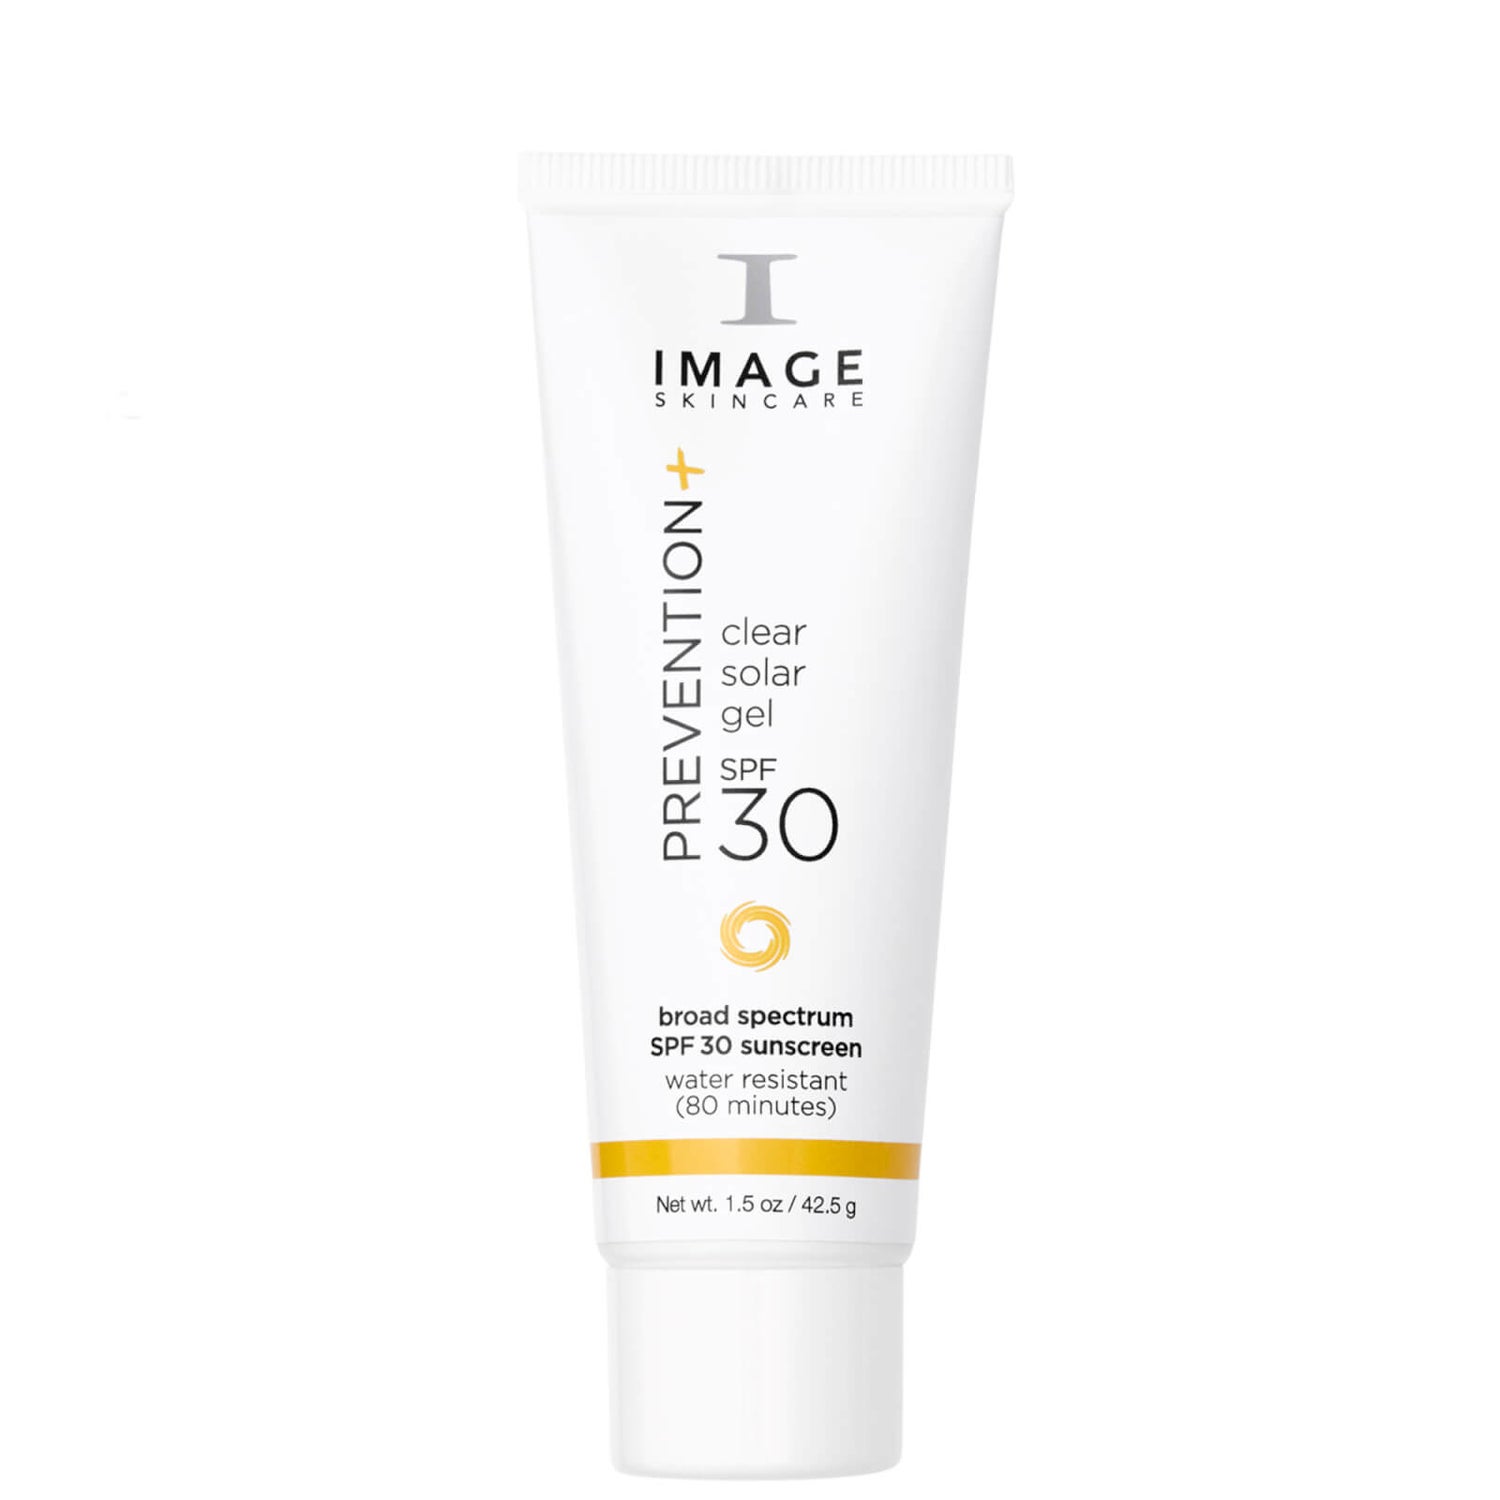 IMAGE Skincare SPF 30 PREVENTION+ Clear Solar Gel 1.5g